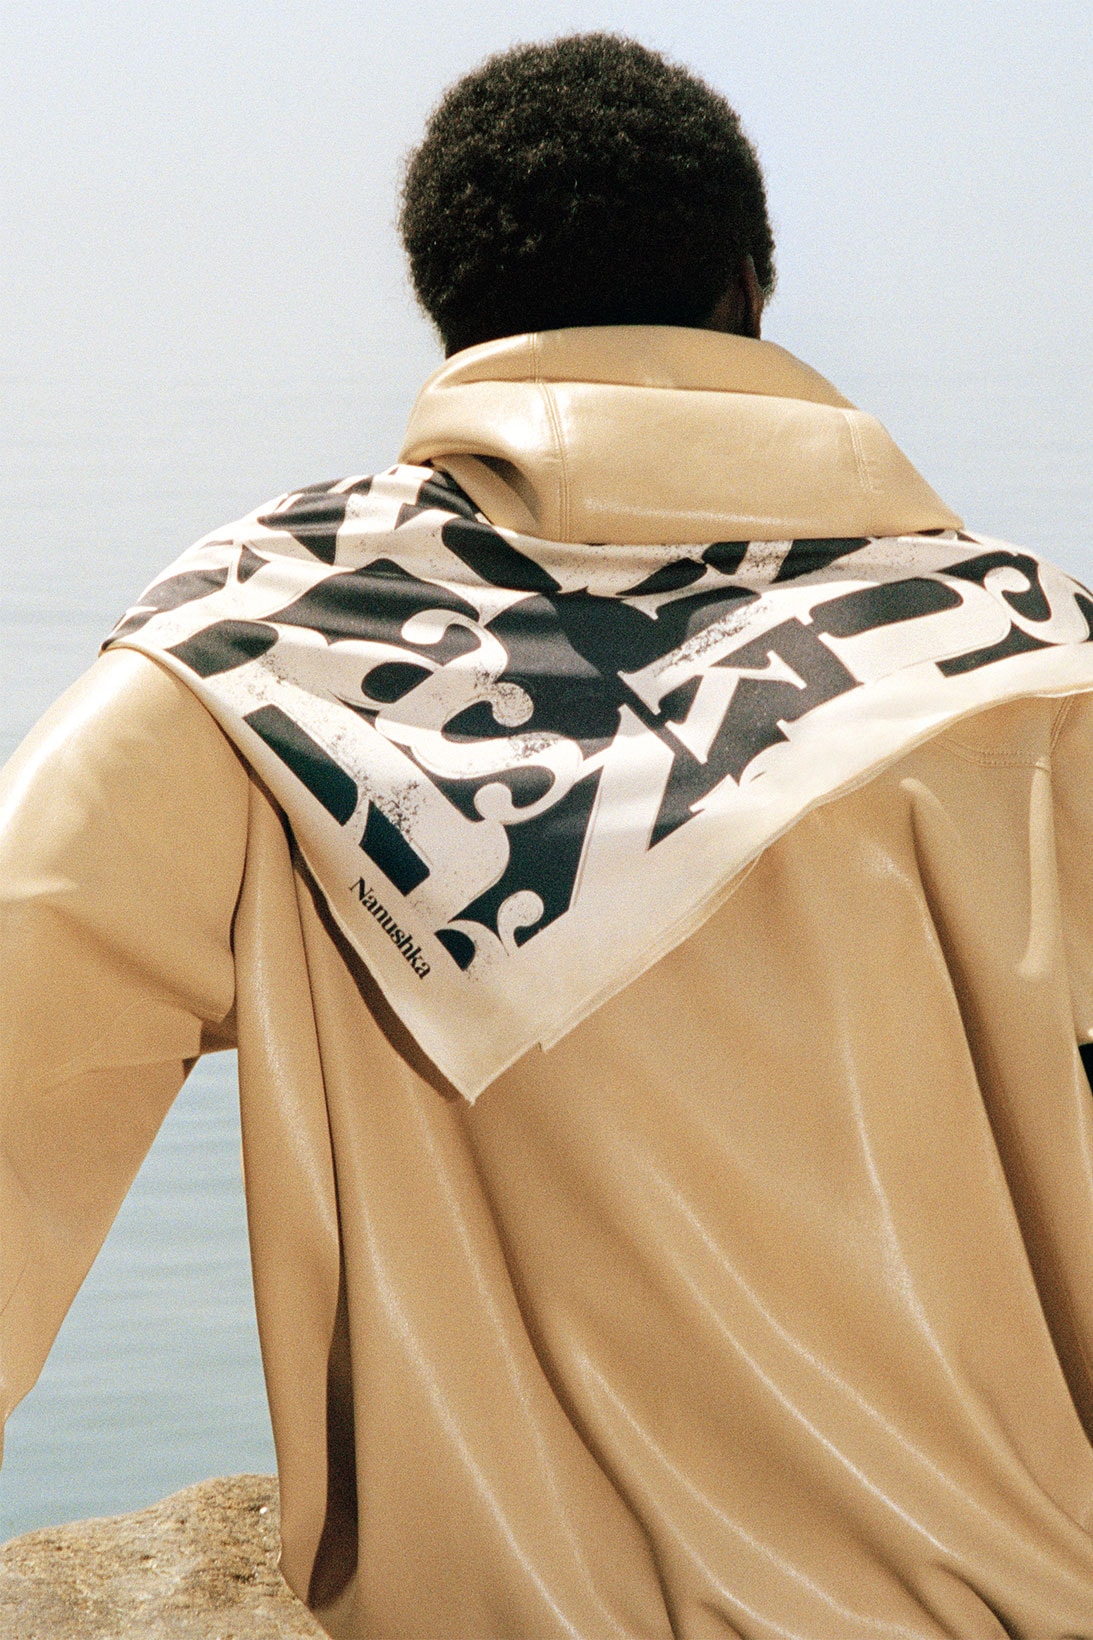 nanushka resort 2021 human nature collection blazers dresses suits sustainability sandra sandor part 1 reflection